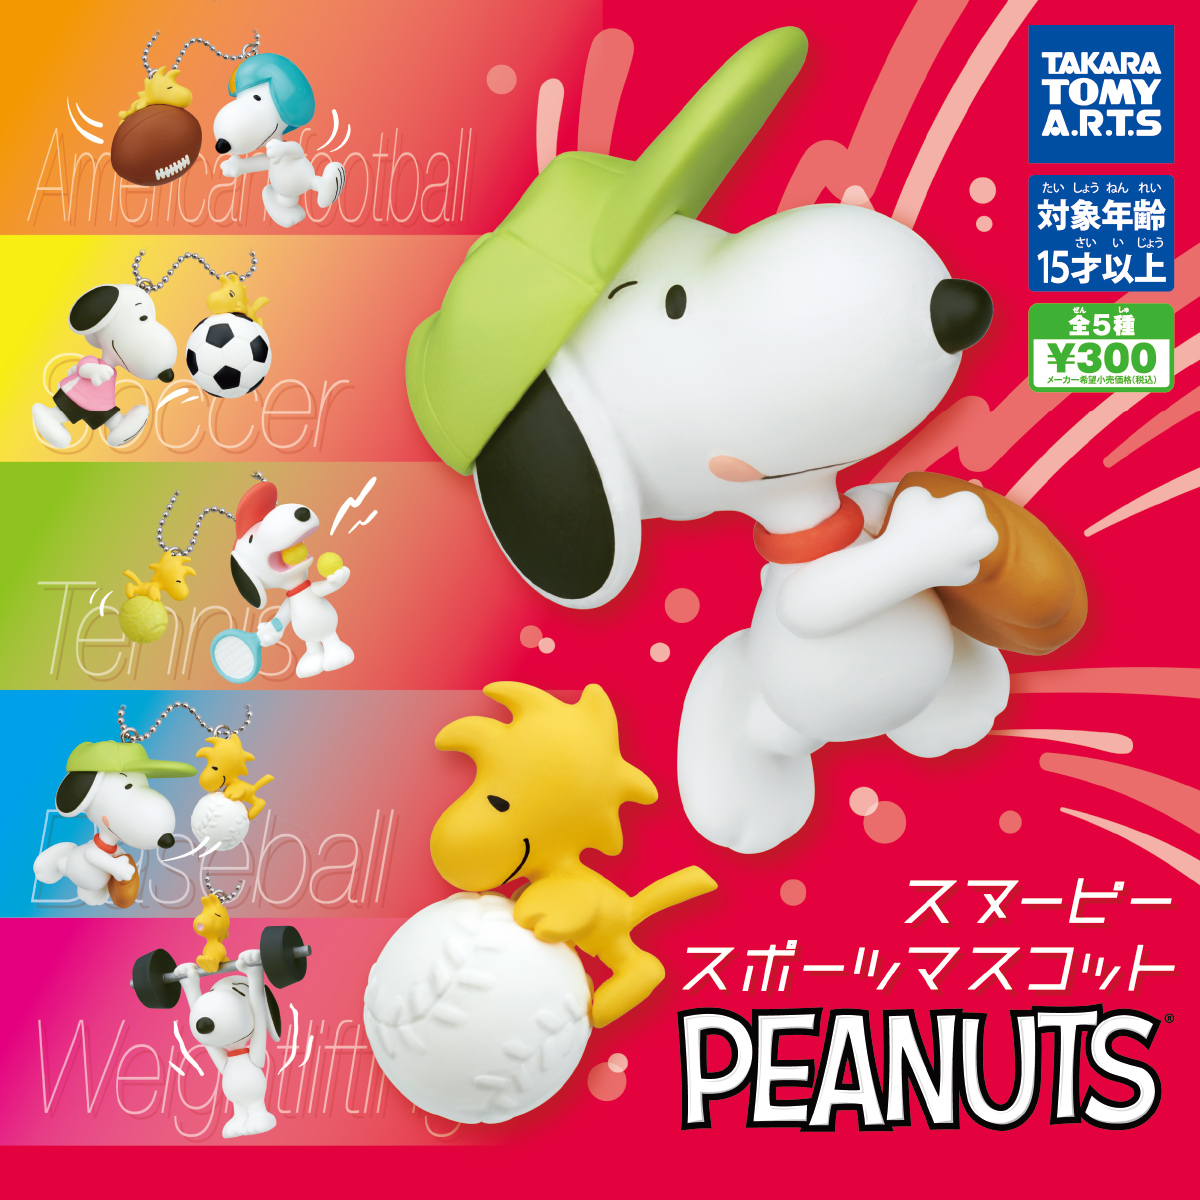 Snoopy スポーツマスコット 商品情報 タカラトミーアーツ